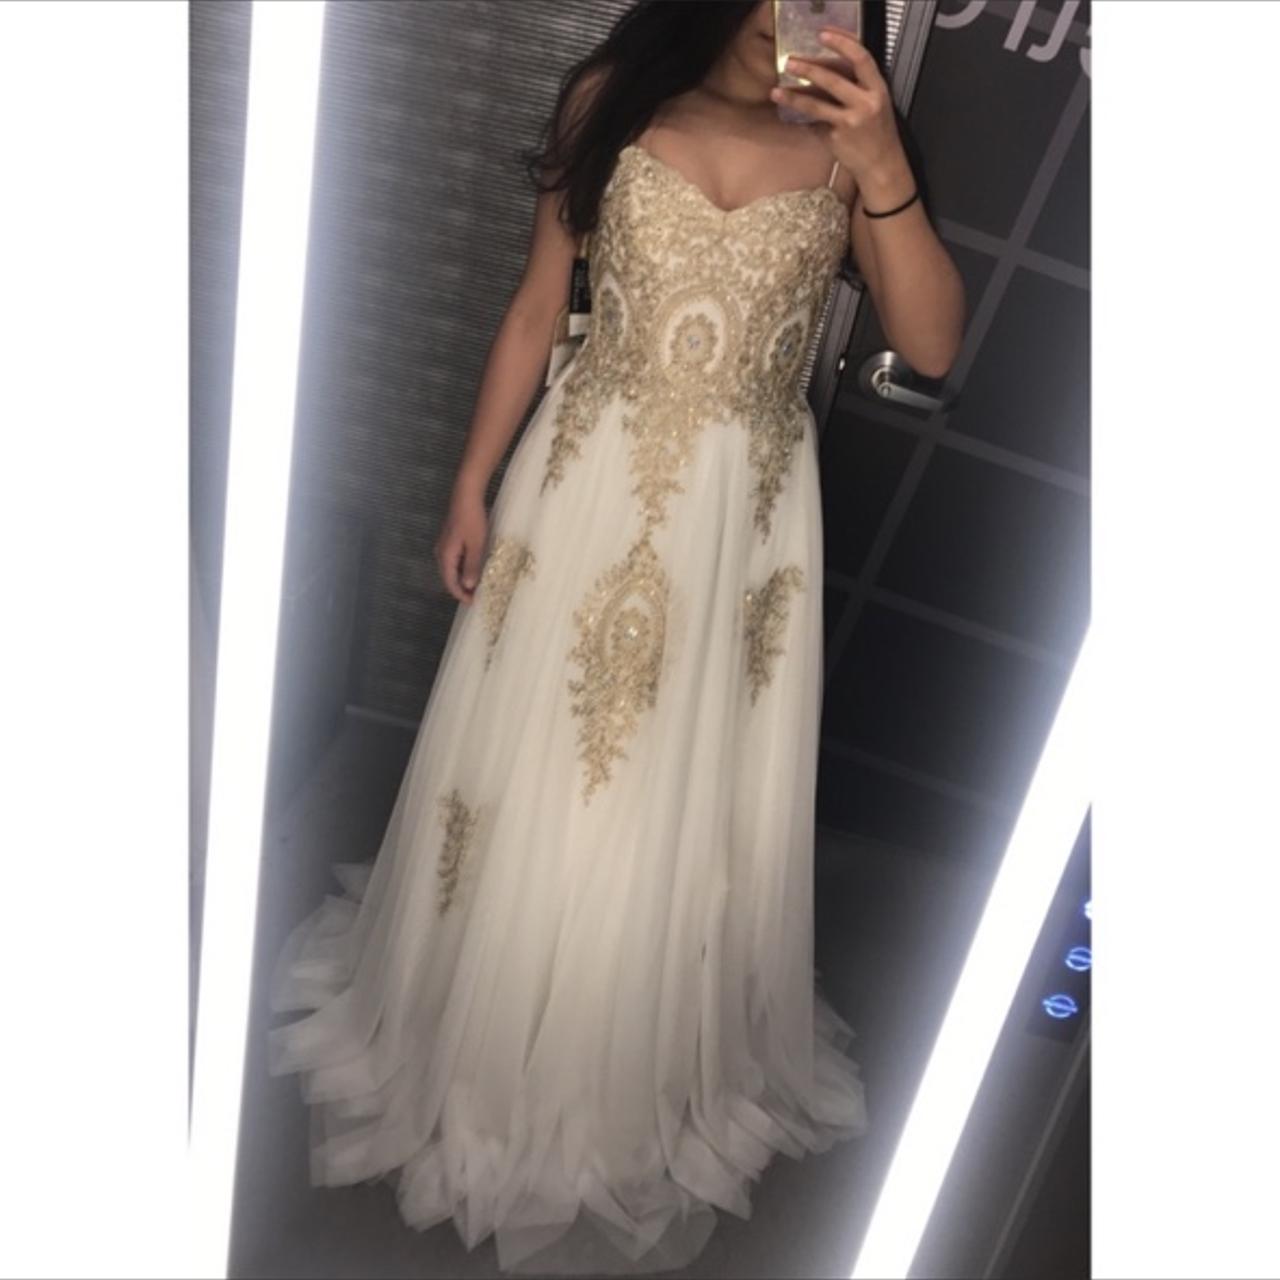 macys prom dress